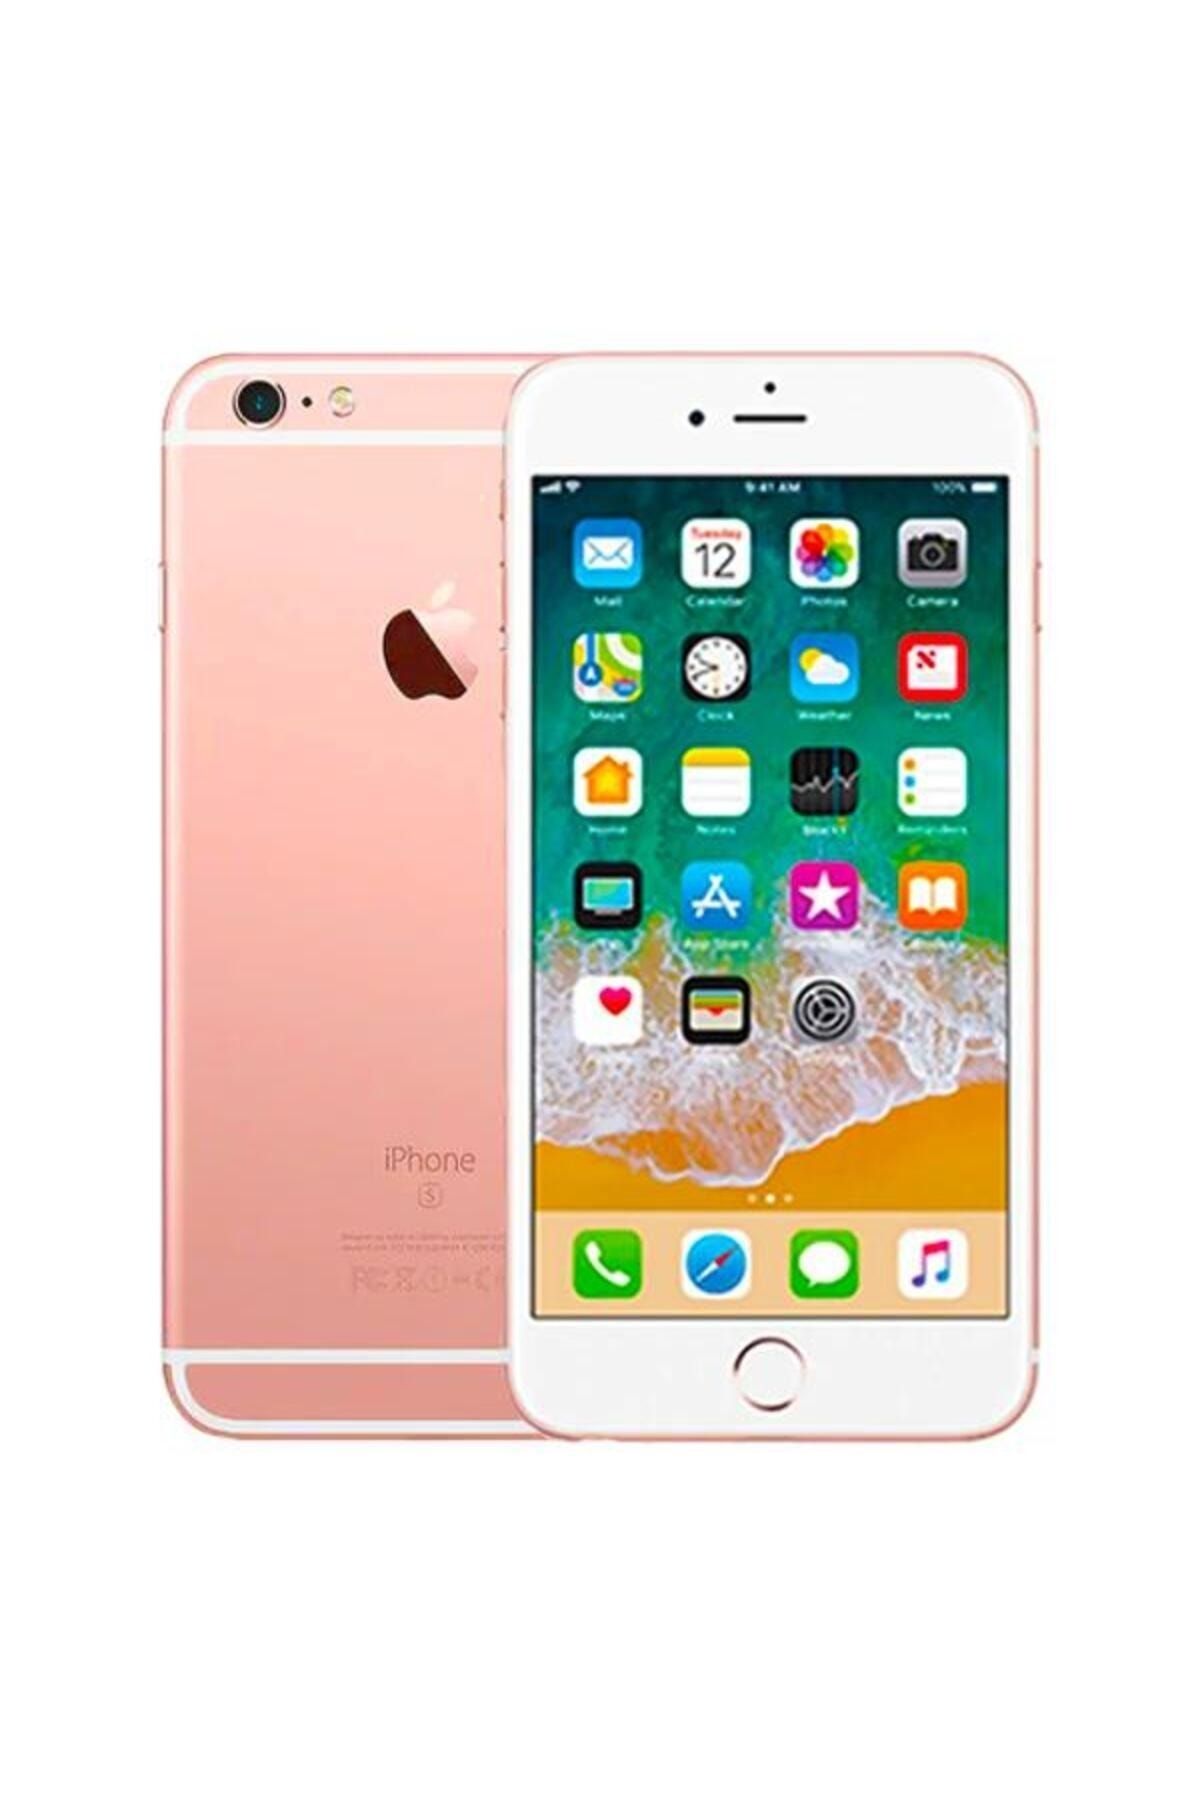 Apple Yenilenmiş iPhone 6S 32 GB Rose Gold Cep Telefonu (12 Ay Garantili) - A Kalite